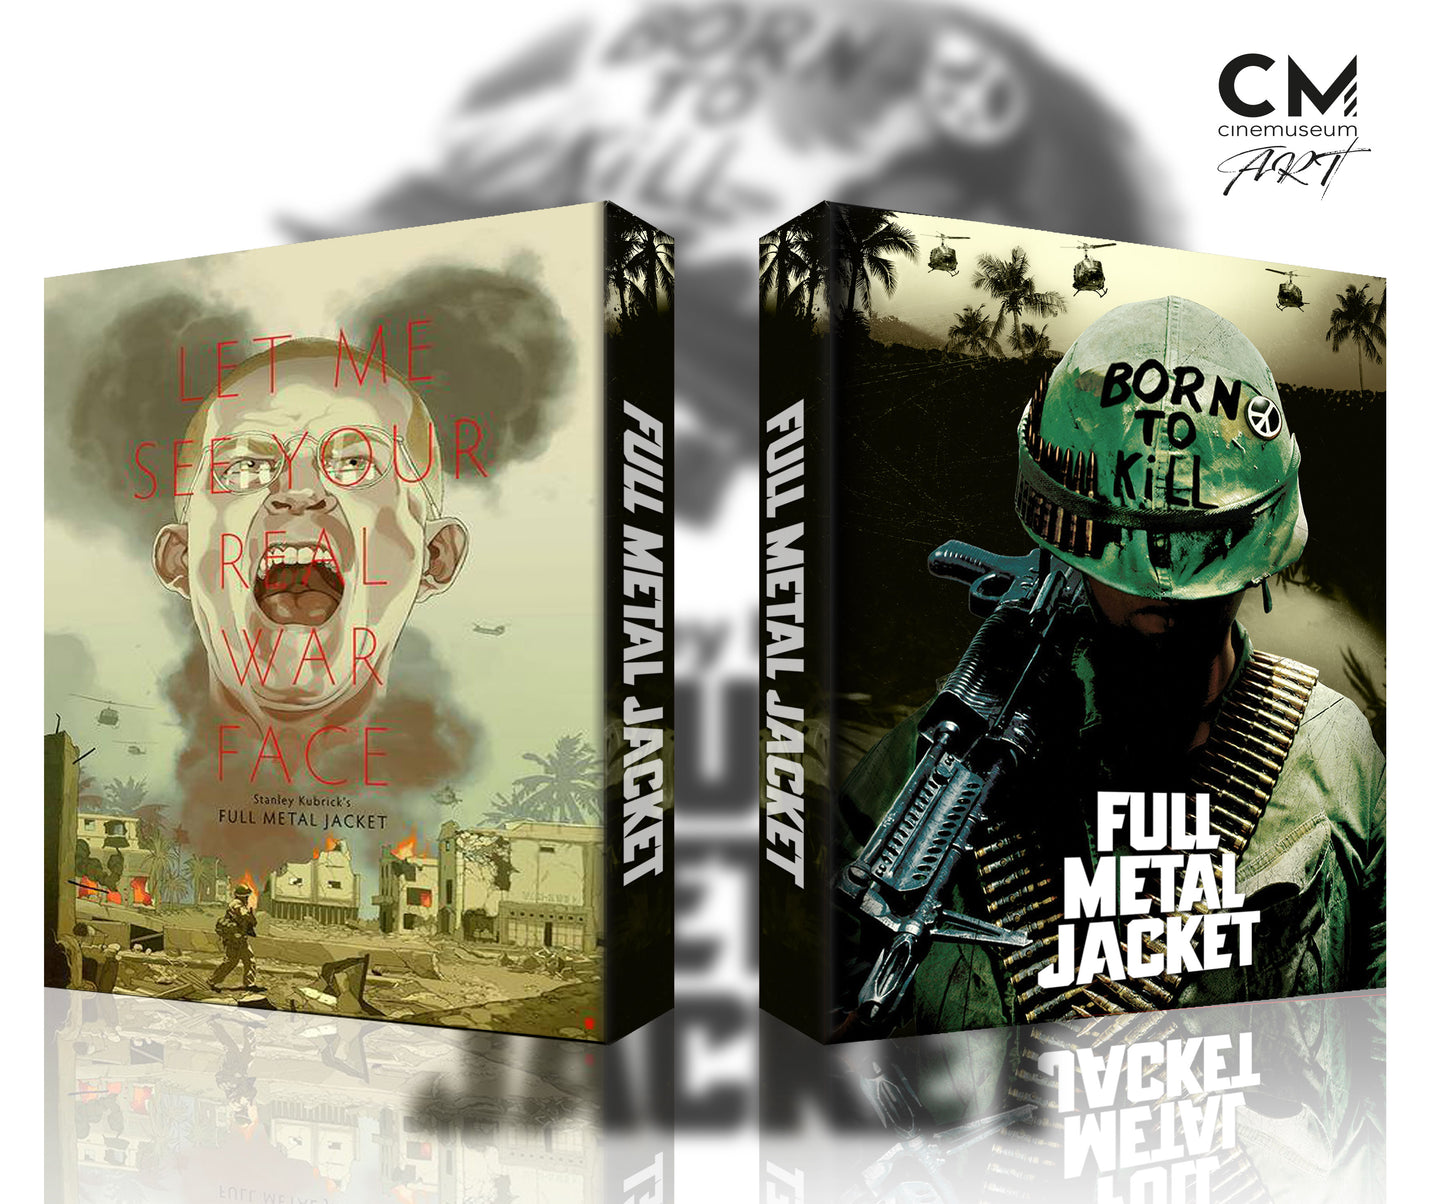 Full Metal Jacket Cinemusem CMA#06  Blu-ray Steelbook Lenticular Full Slip